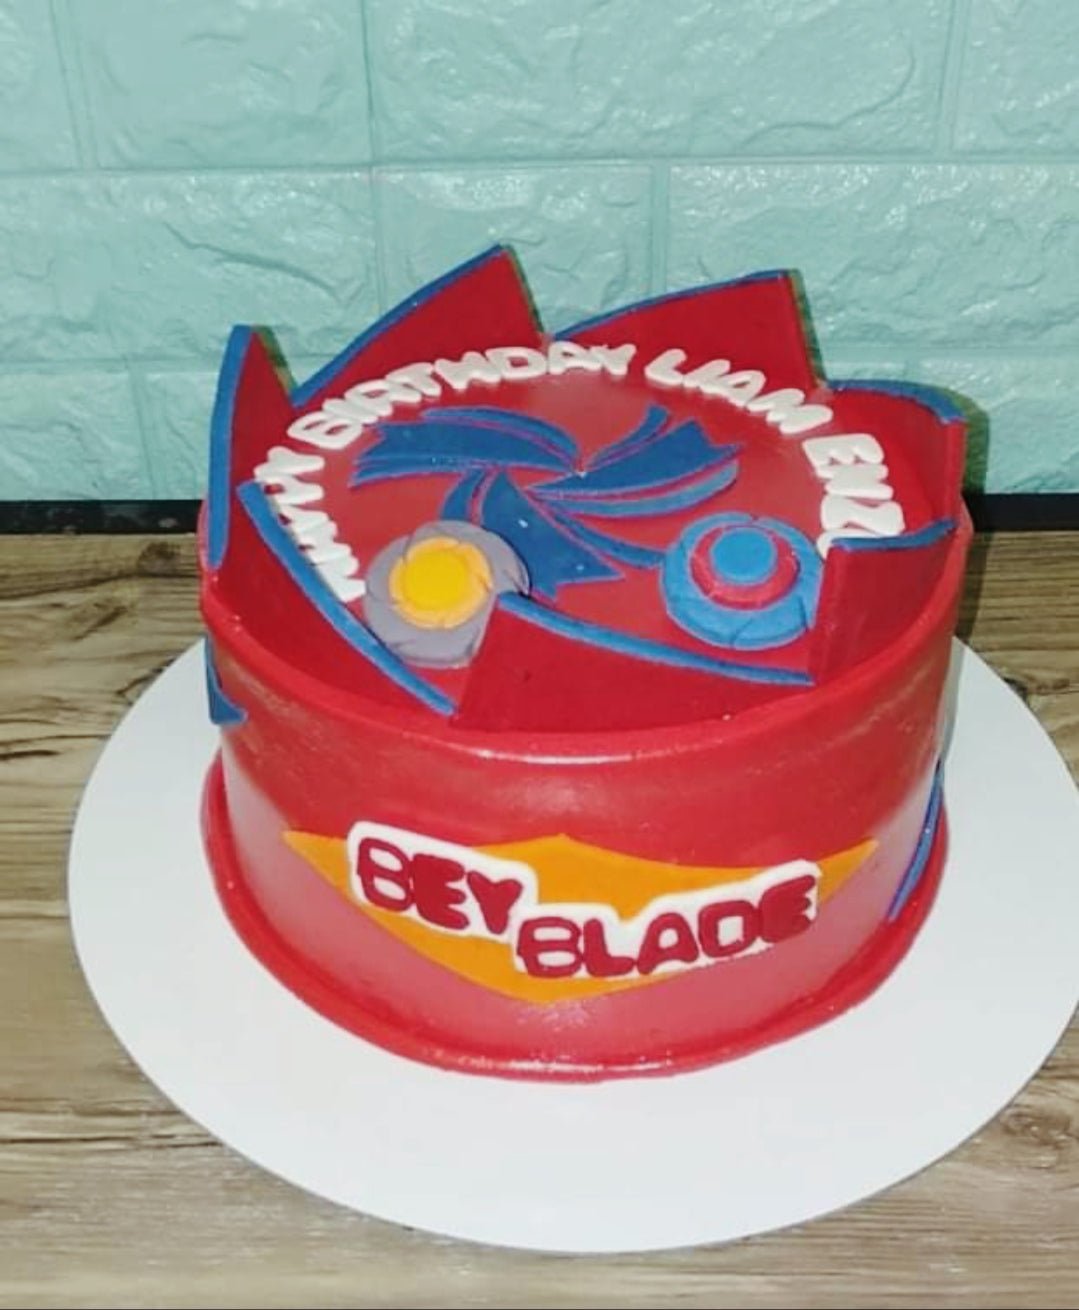 Beyblade Cake with rotating beyblade Toys - YouTube